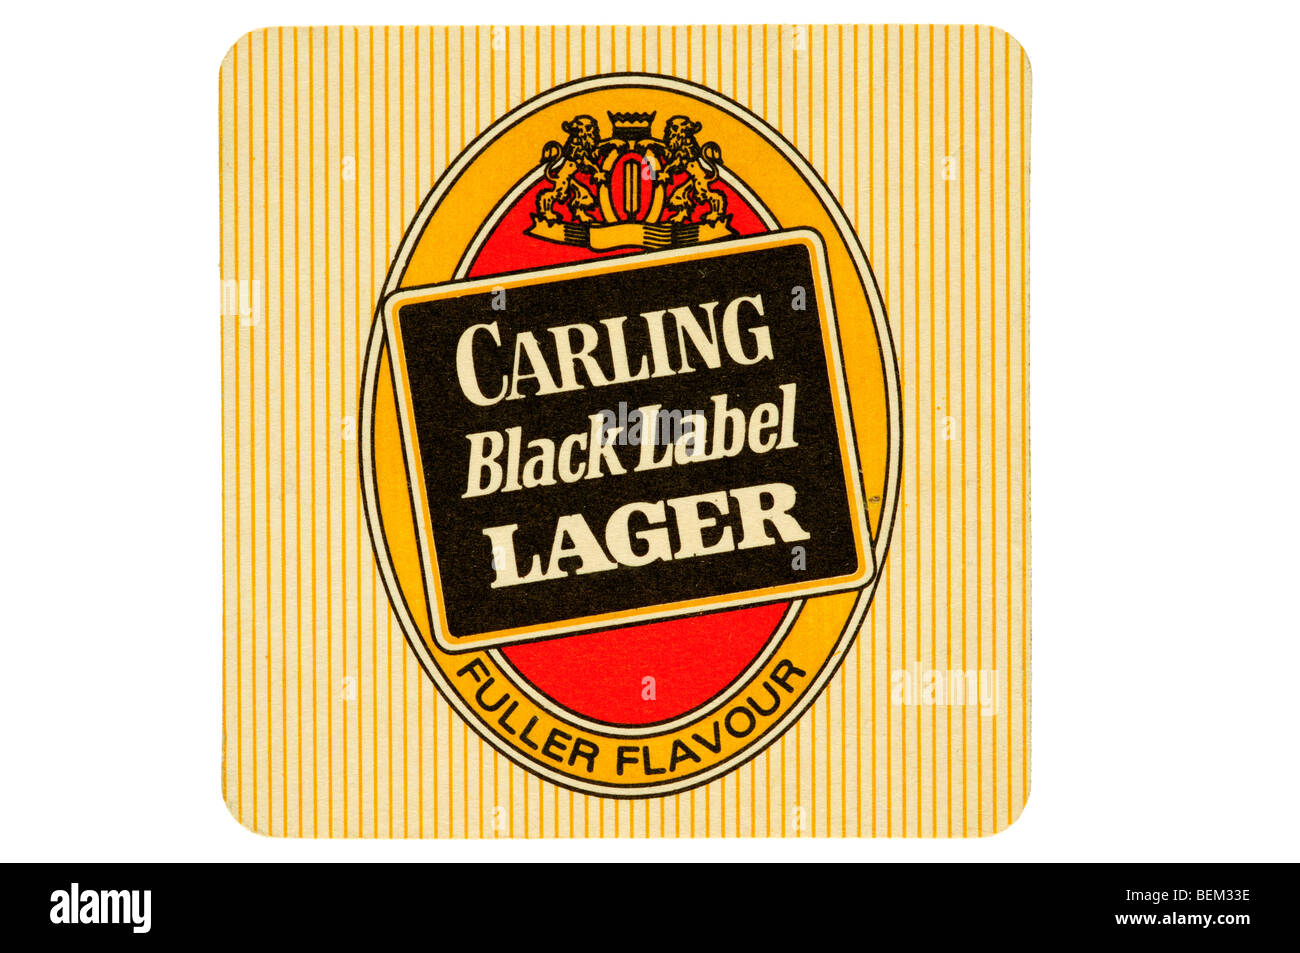 carling black label lager fuller flavour Stock Photo